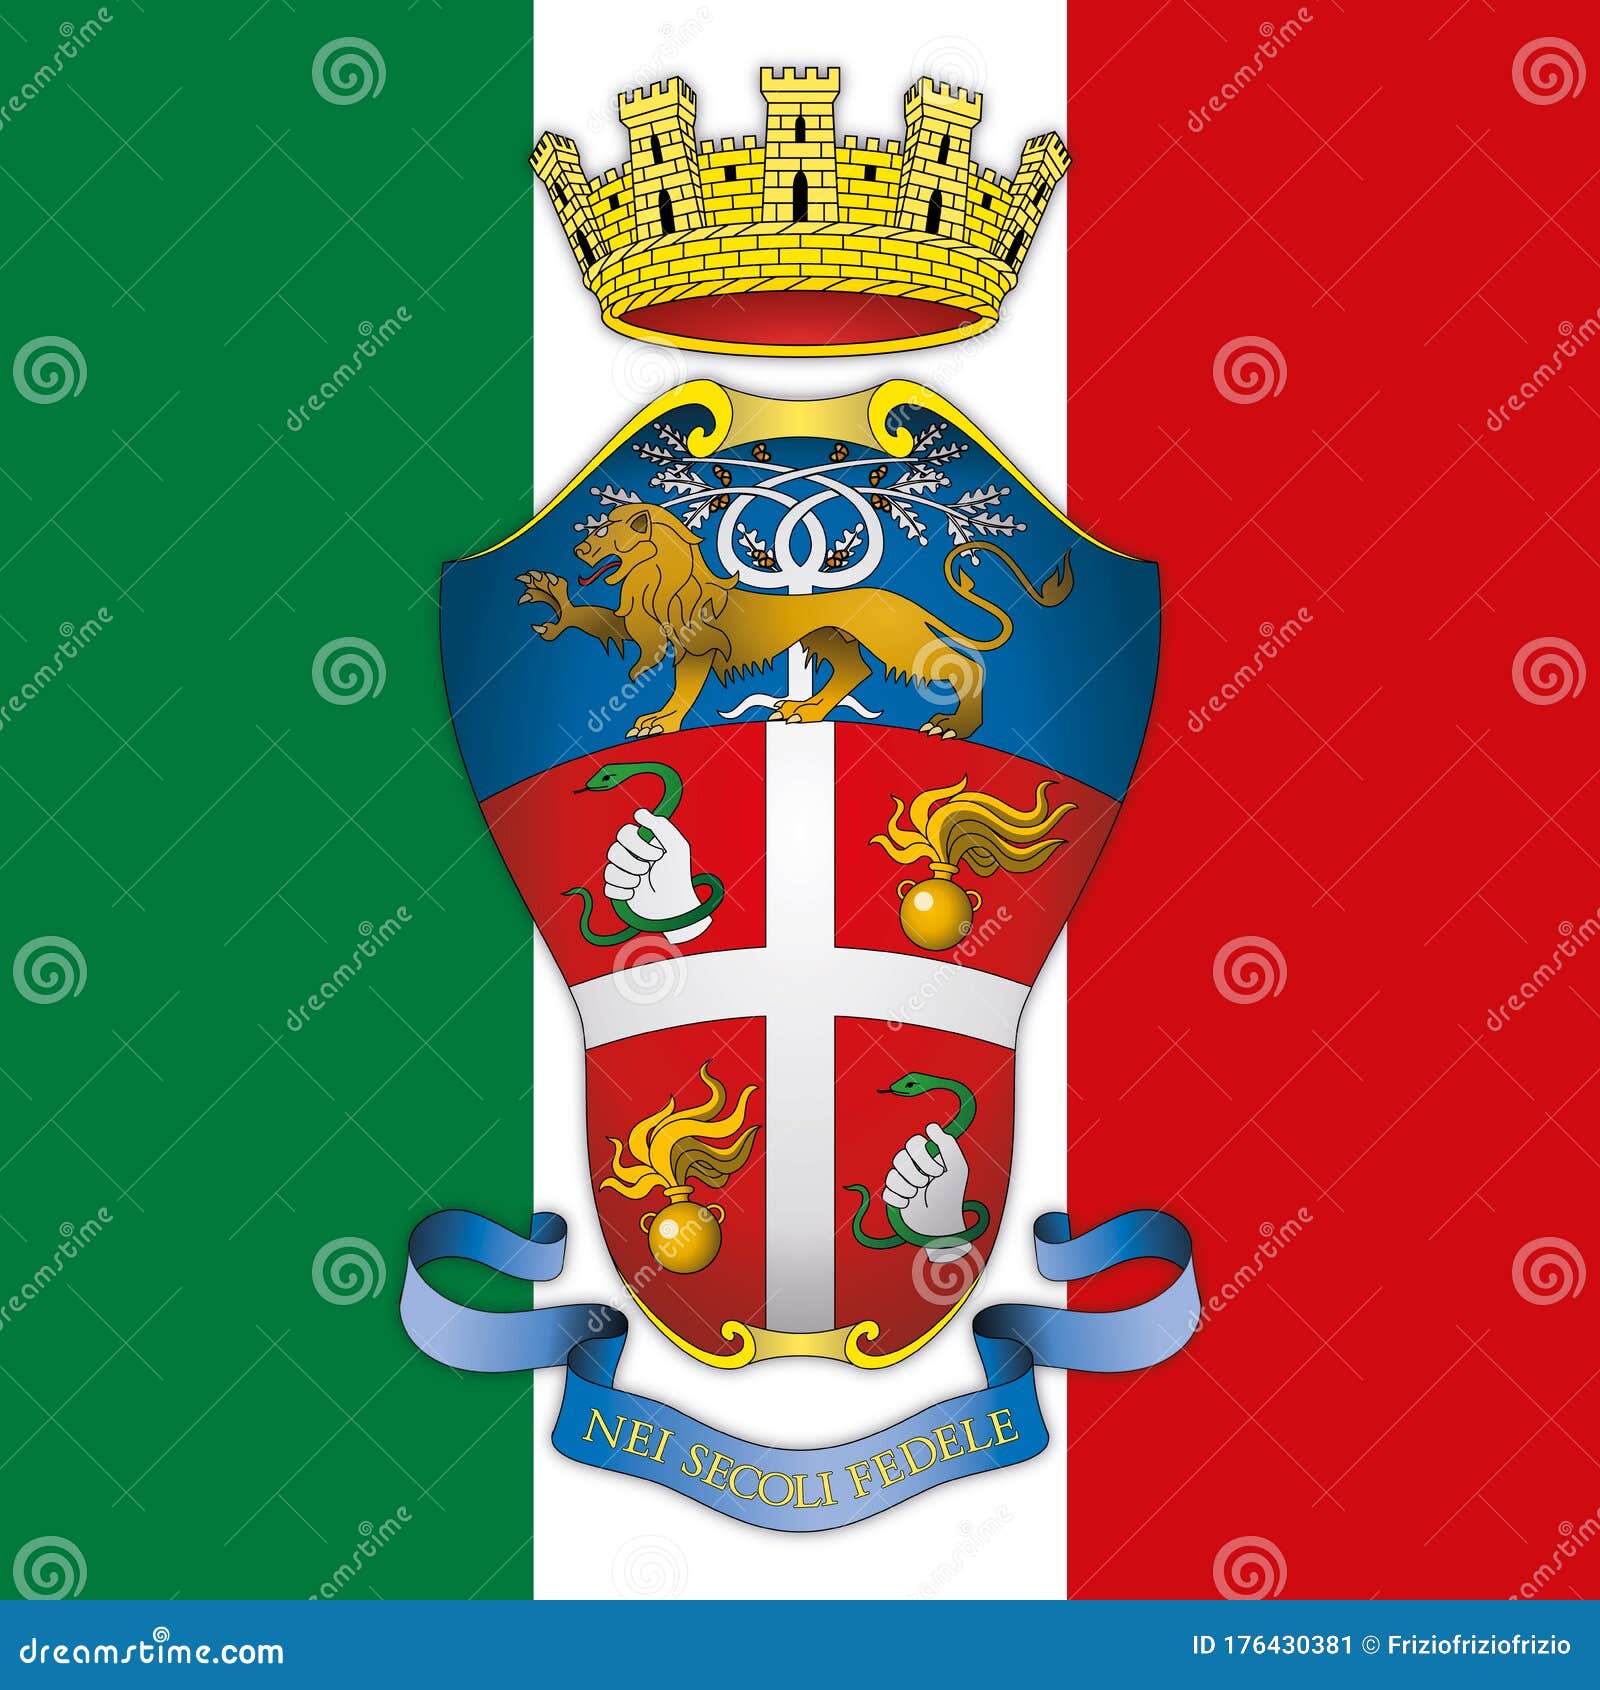 corpo dei carabinieri coat of arms on the italian flag, italy